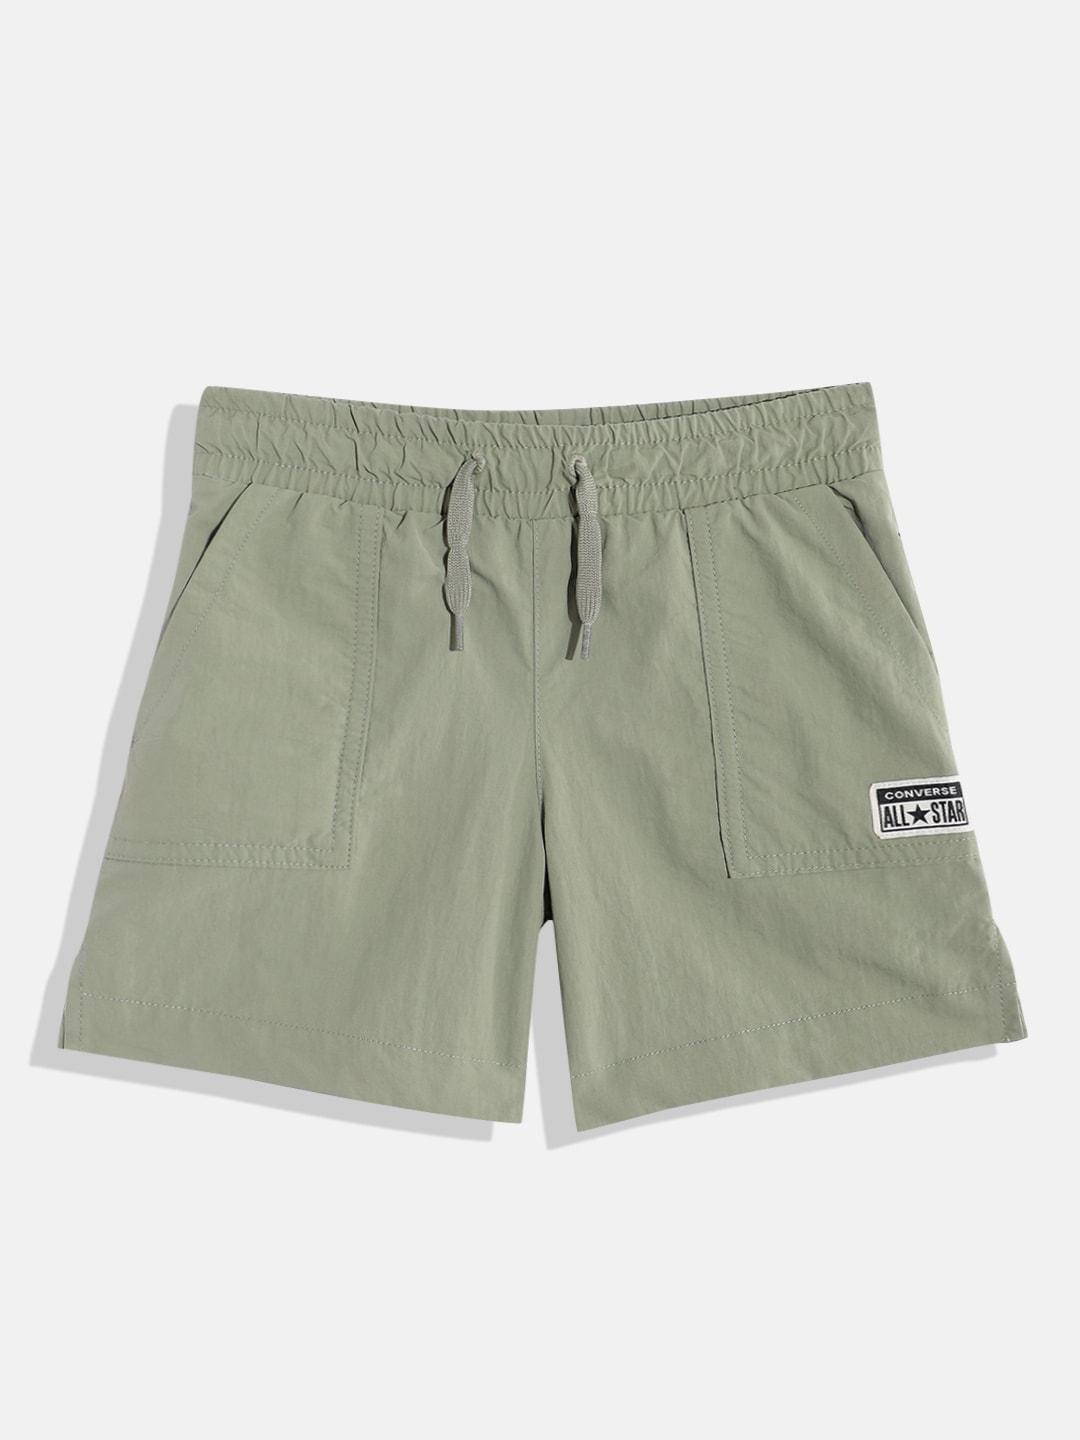 converse-boys-olive-green-shorts